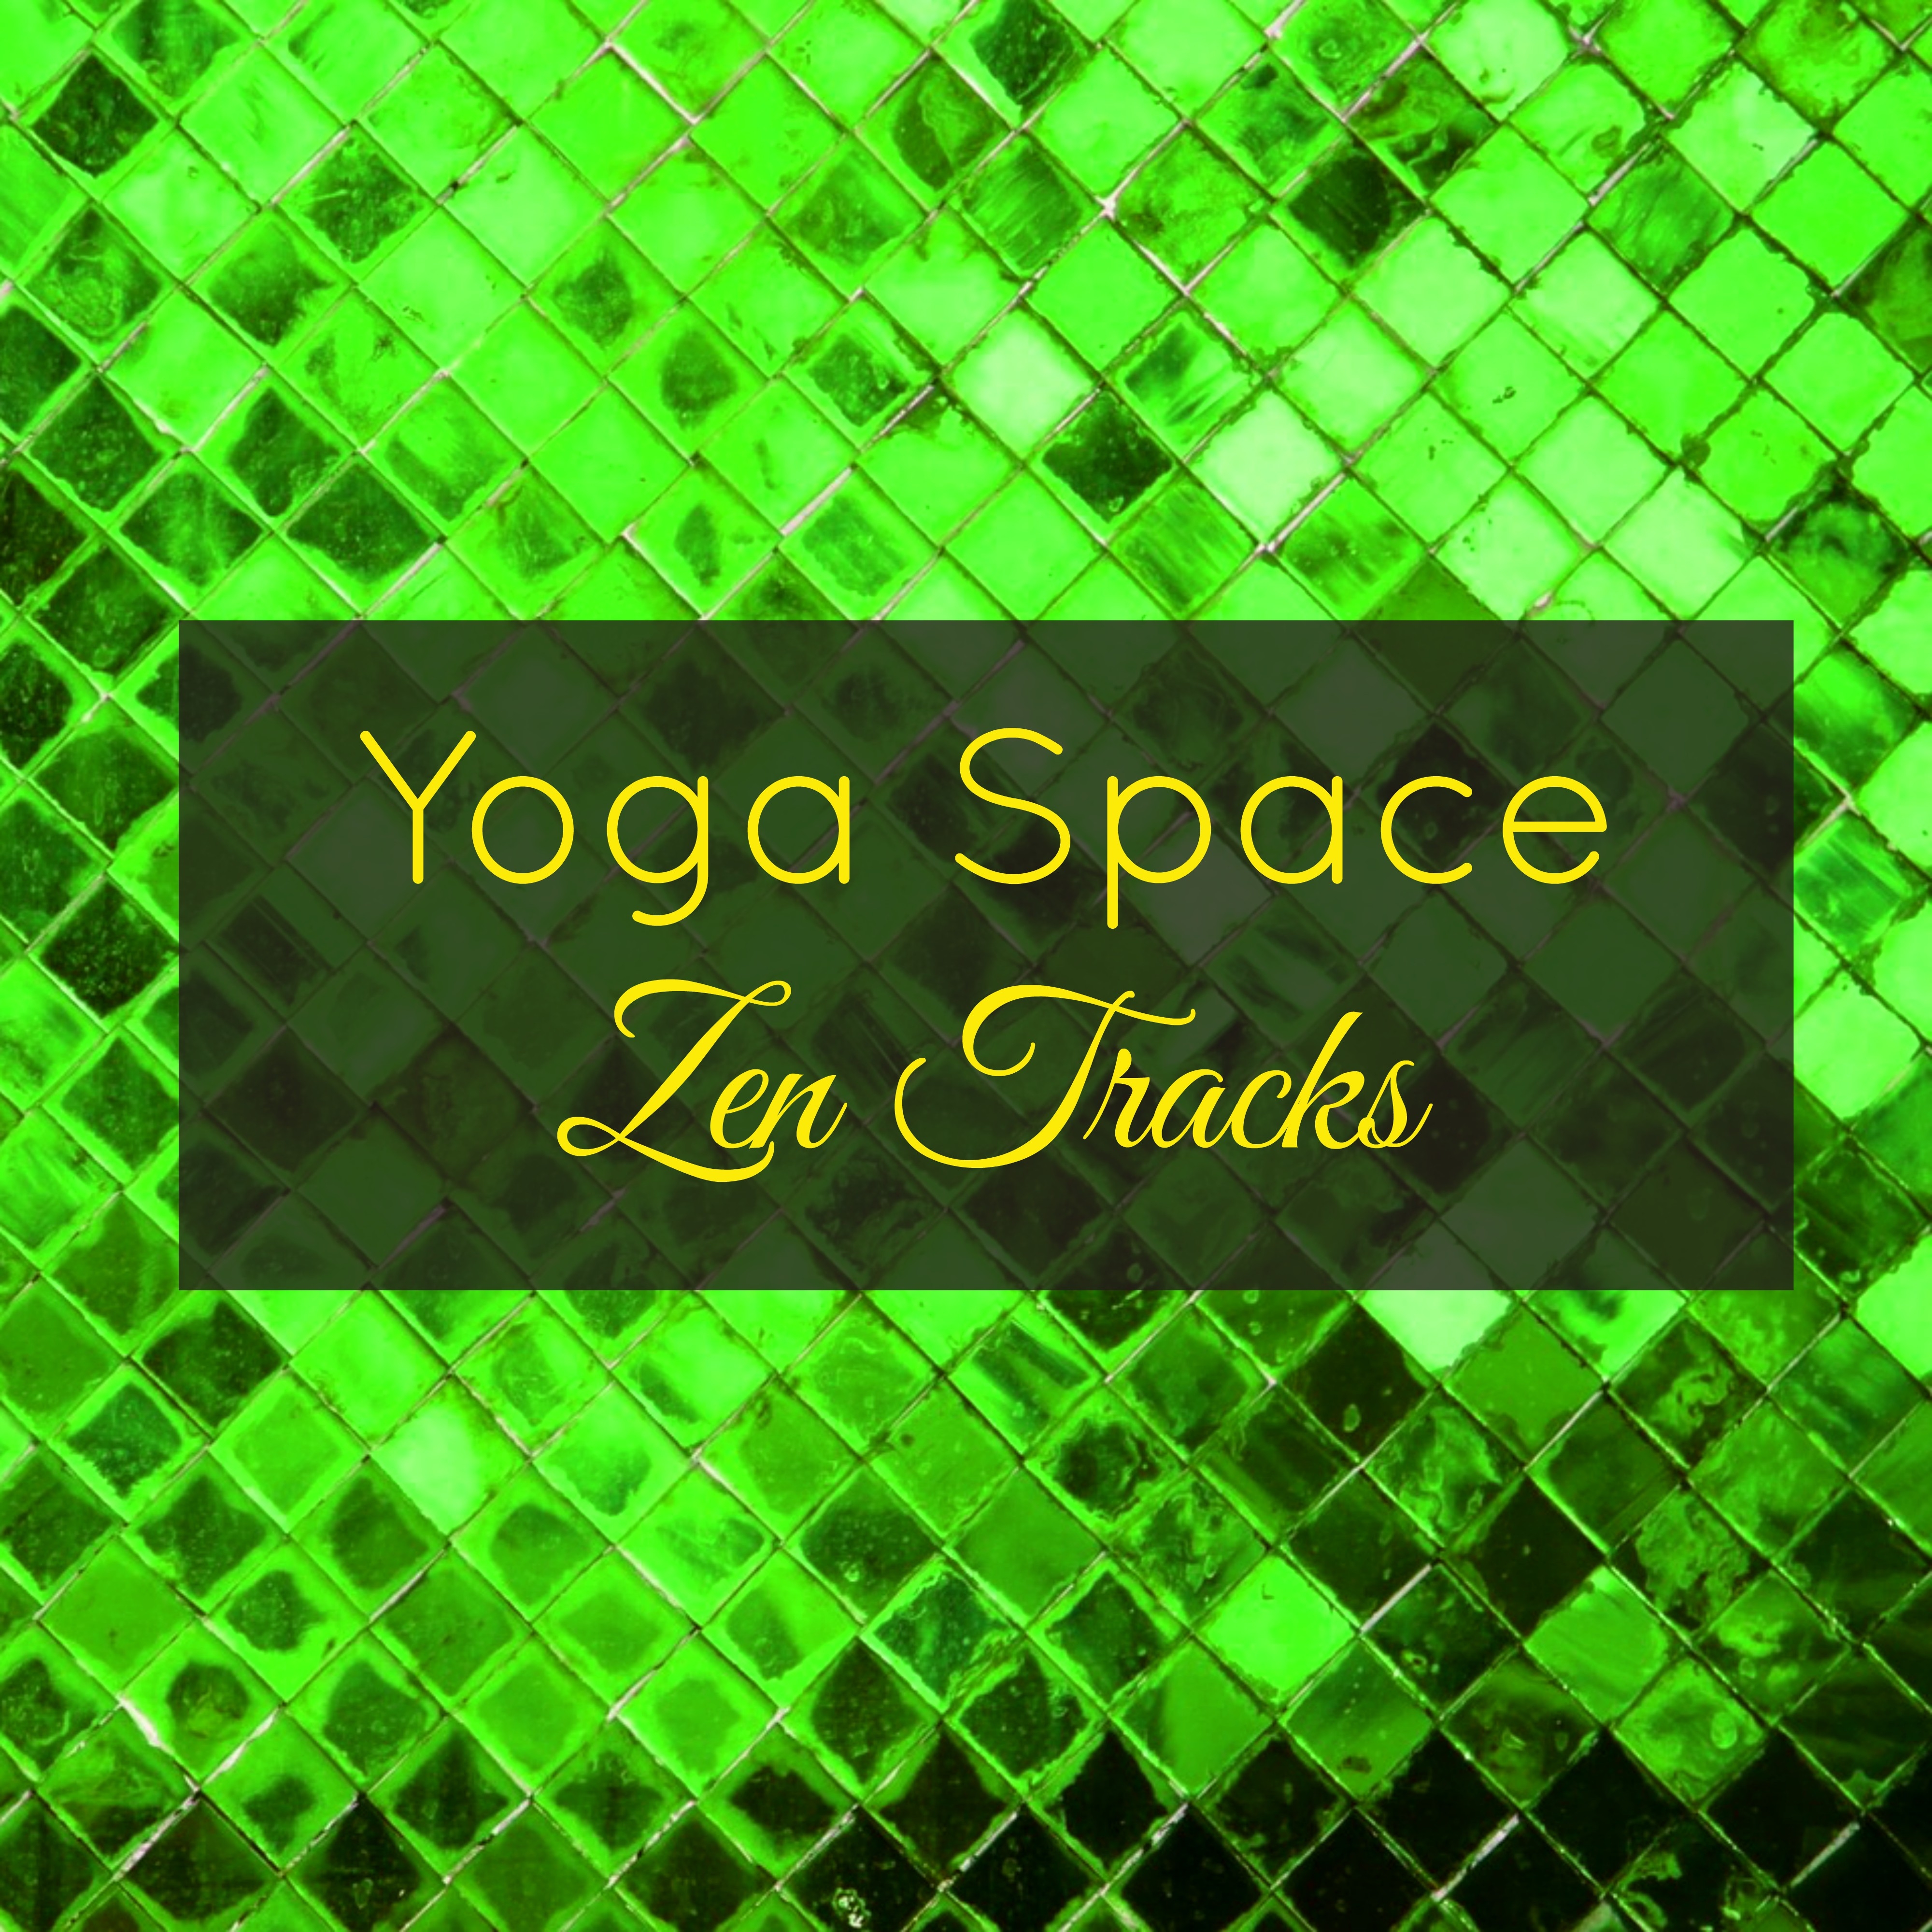 Yoga Space Zen Tracks